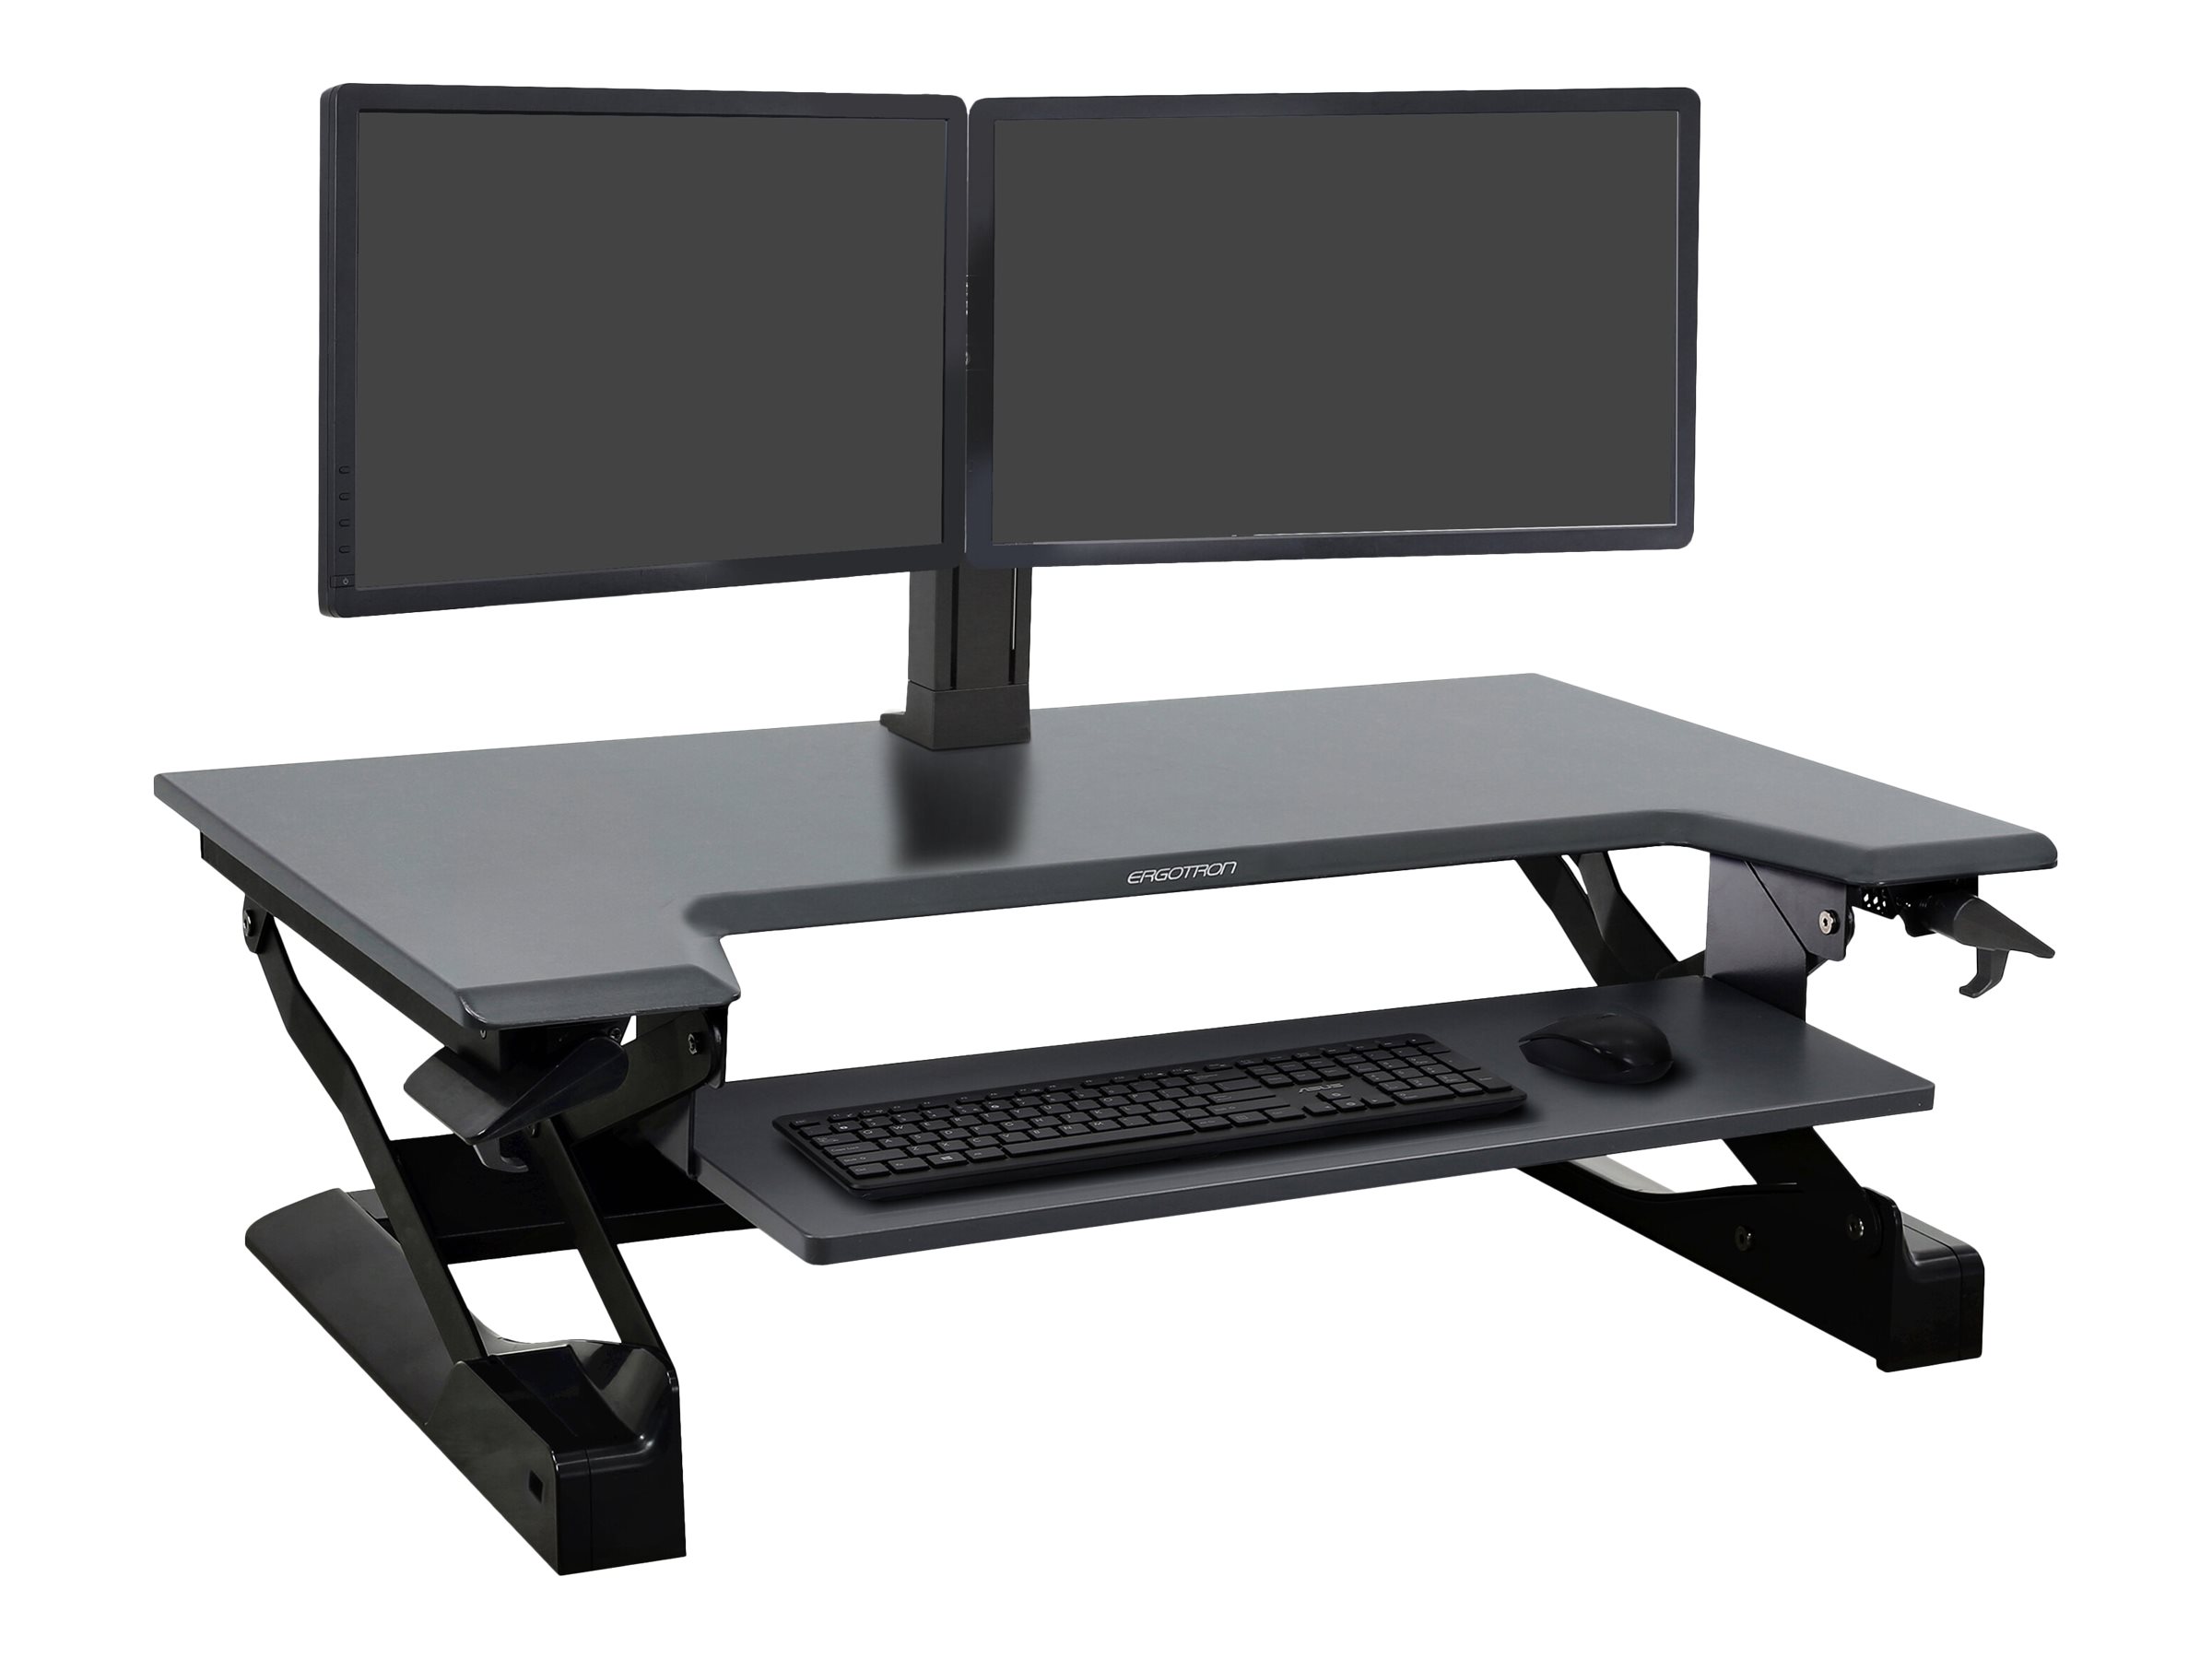 Ergotron WorkFit-TL - Standing desk converter